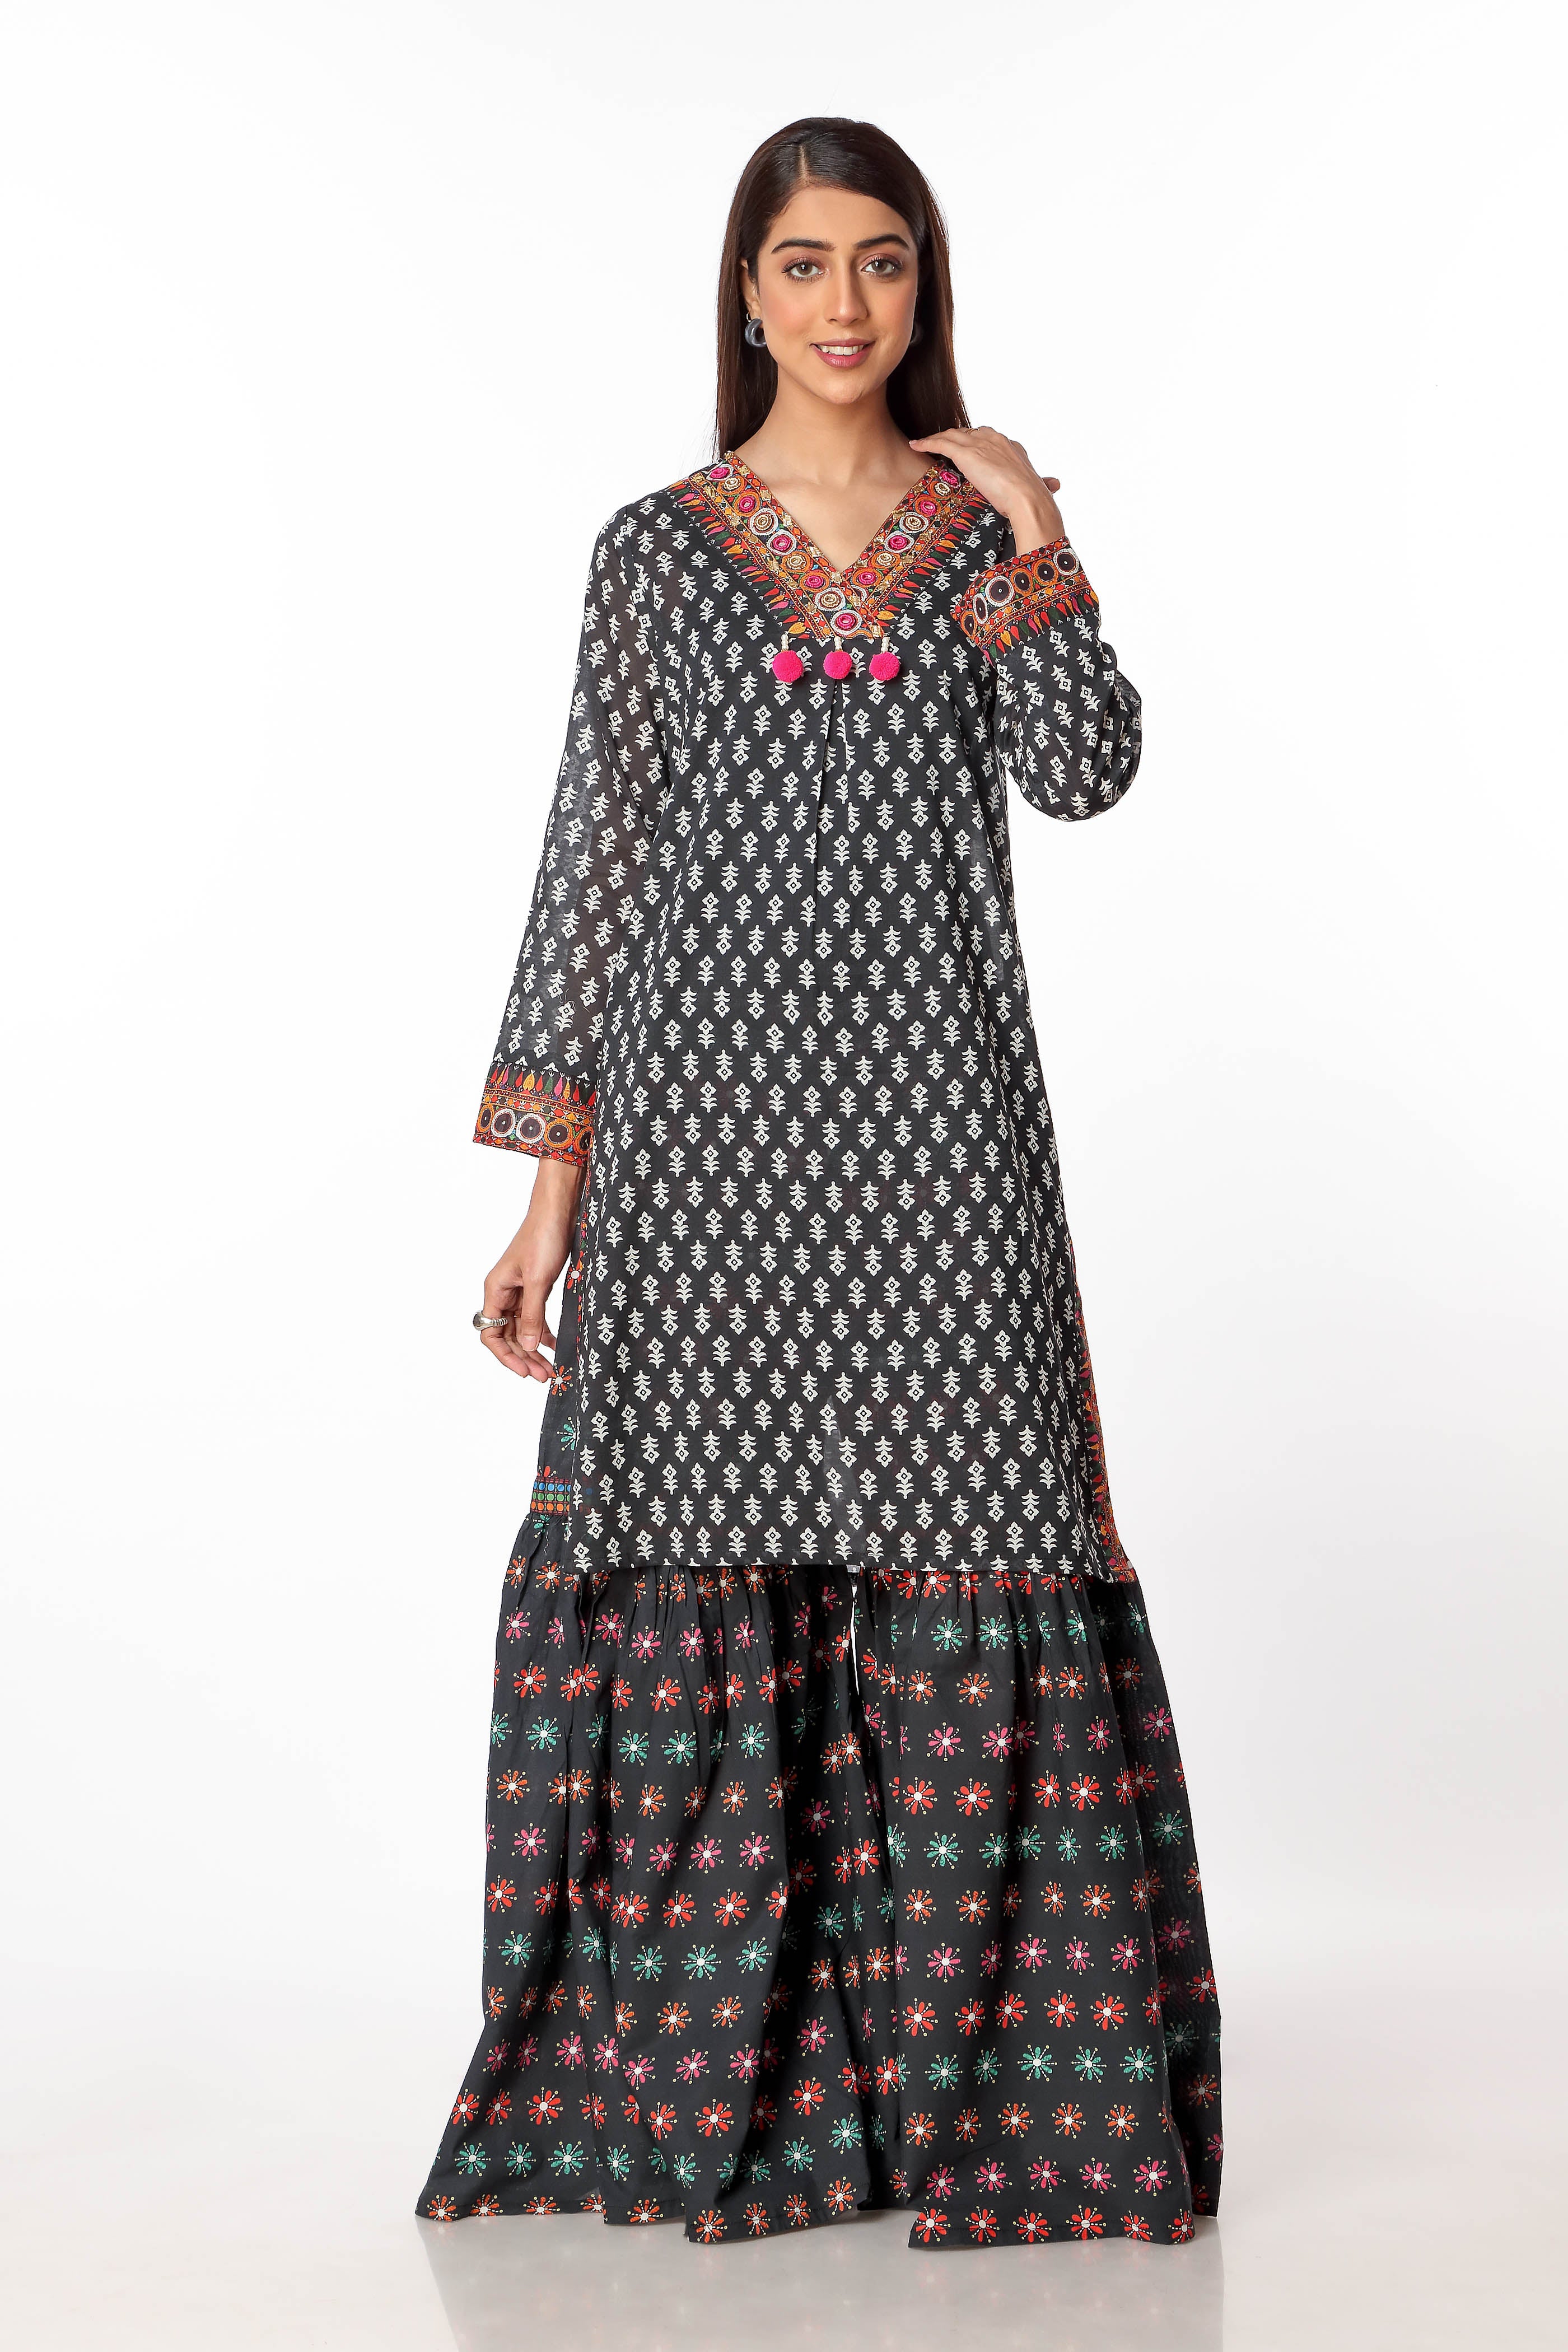 Sheesha Haar in Multi coloured Printed Lawn fabric